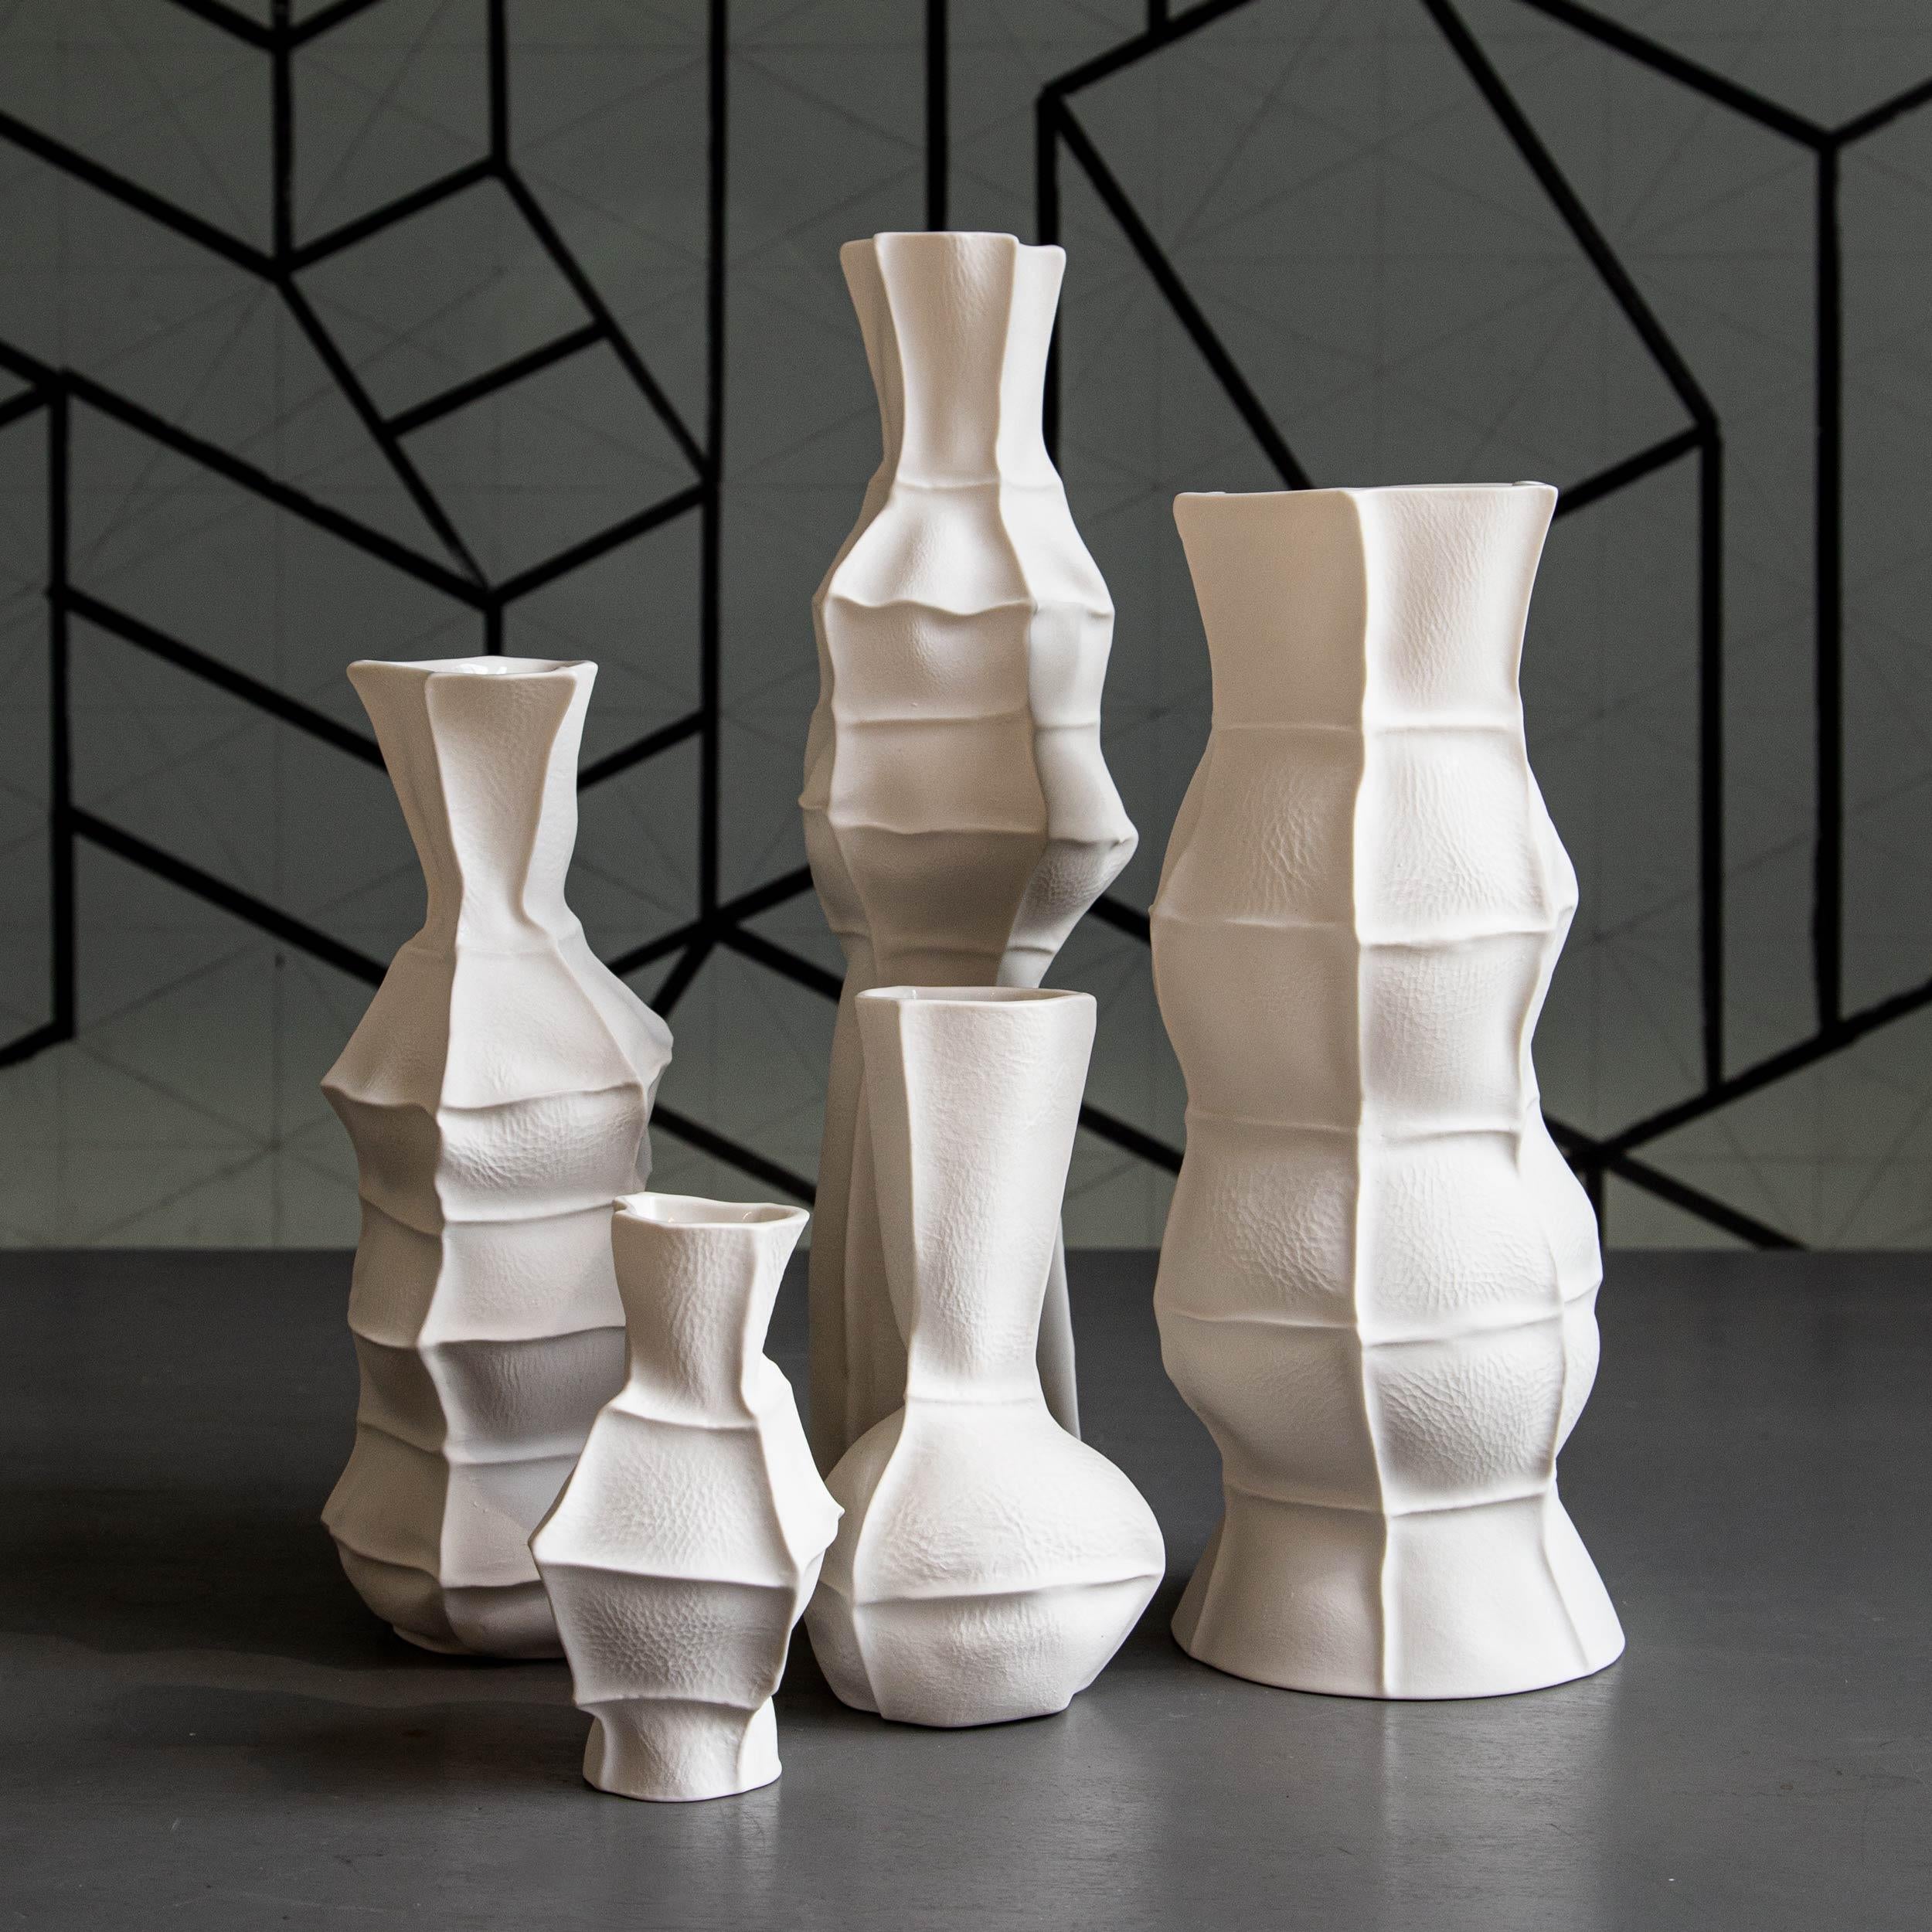 In stock, Ceramic White Kawa Vase, Set of 5, organic porcelain vases 3